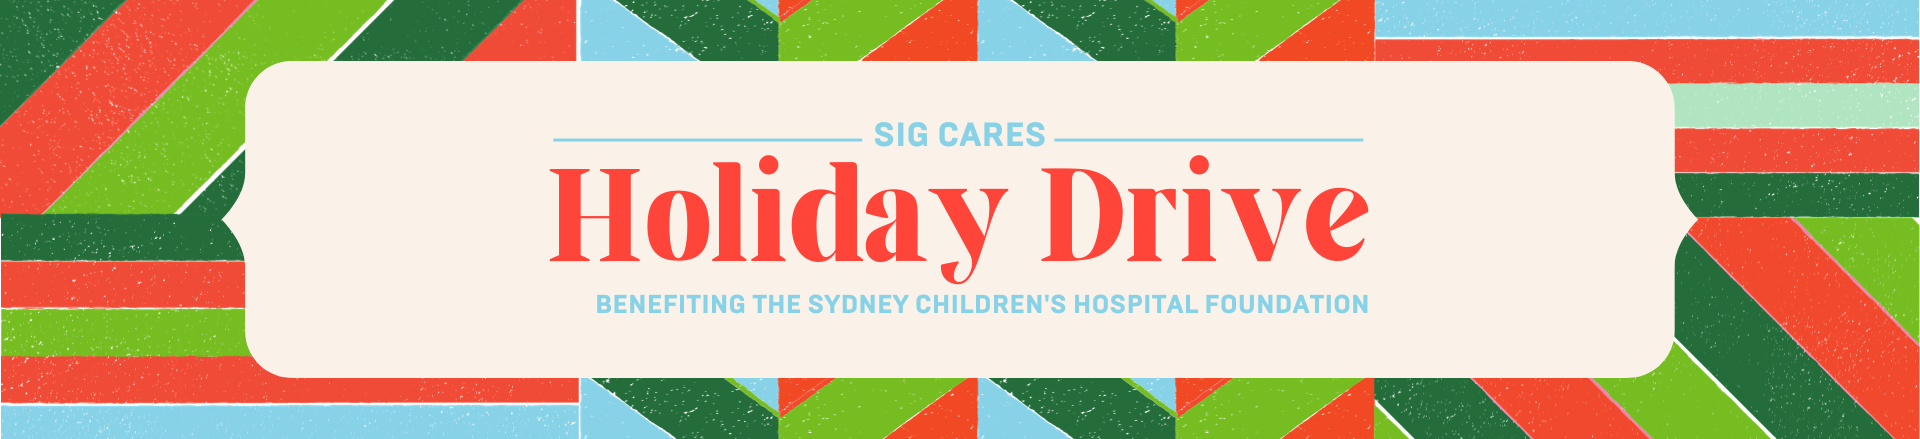 Sydney Children's Hospitals Foundation - SIG